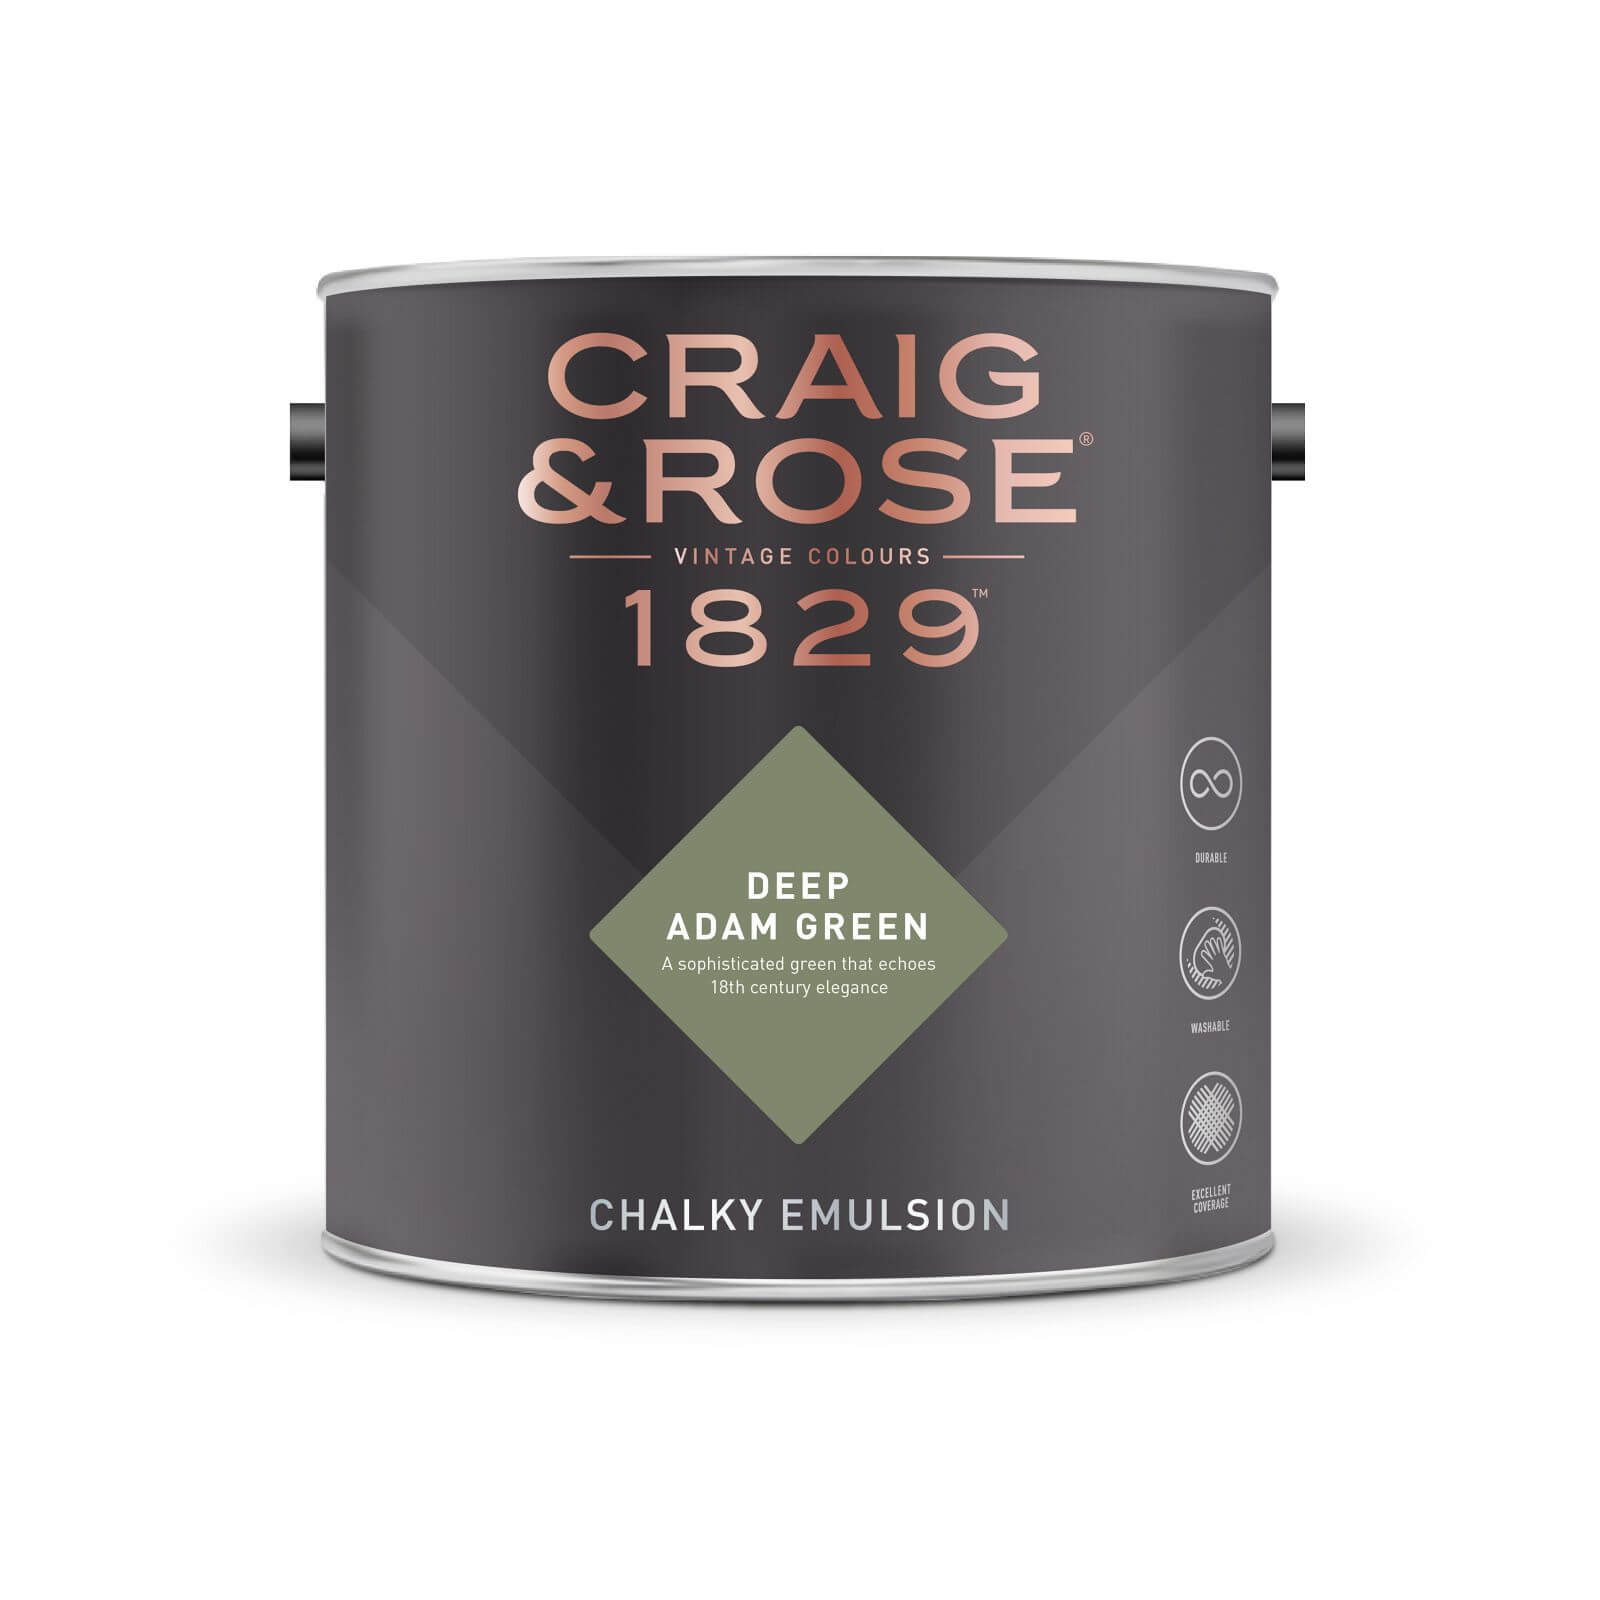 Craig & Rose 1829 Chalky Emulsion Paint Deep Adam Green - Tester 50ml